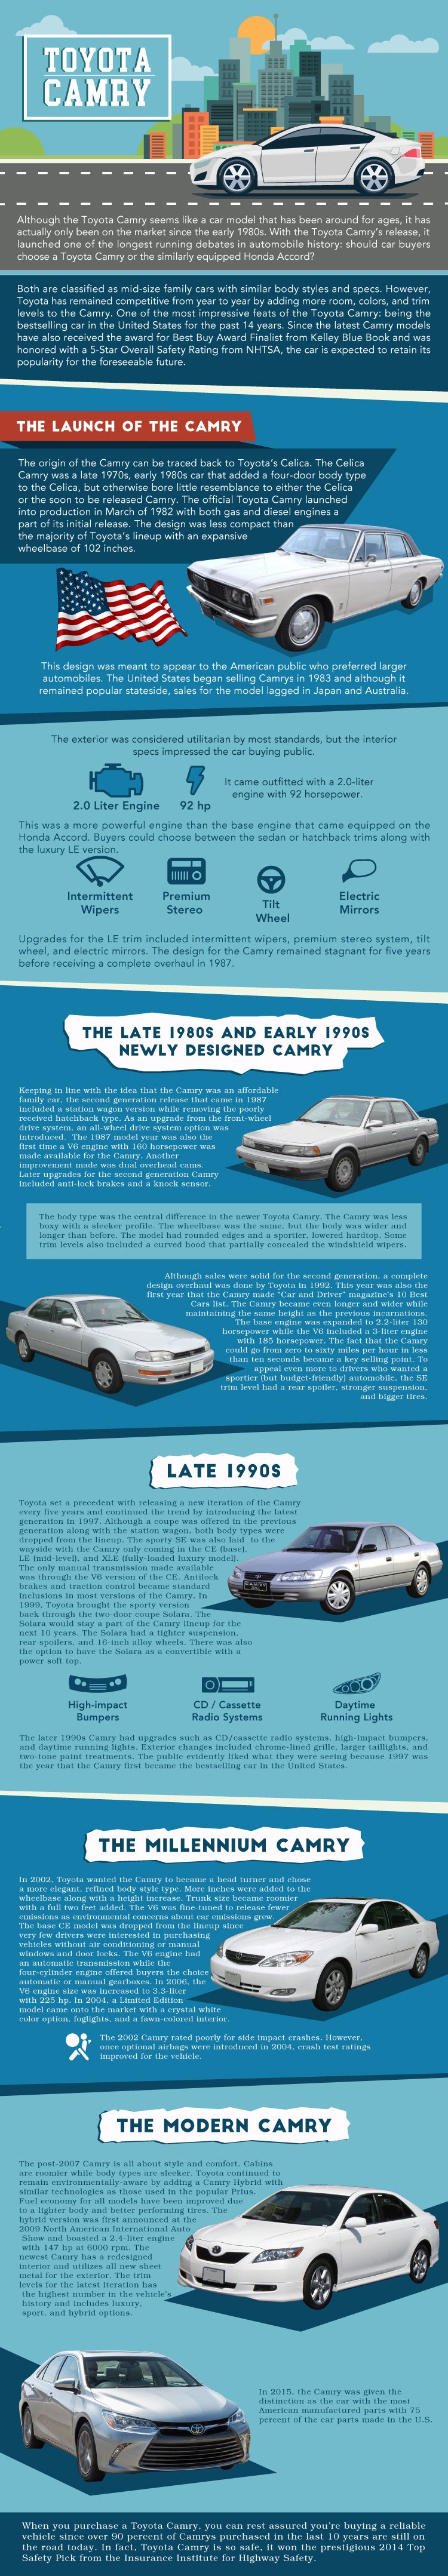 ToyotaCamry_Infographic